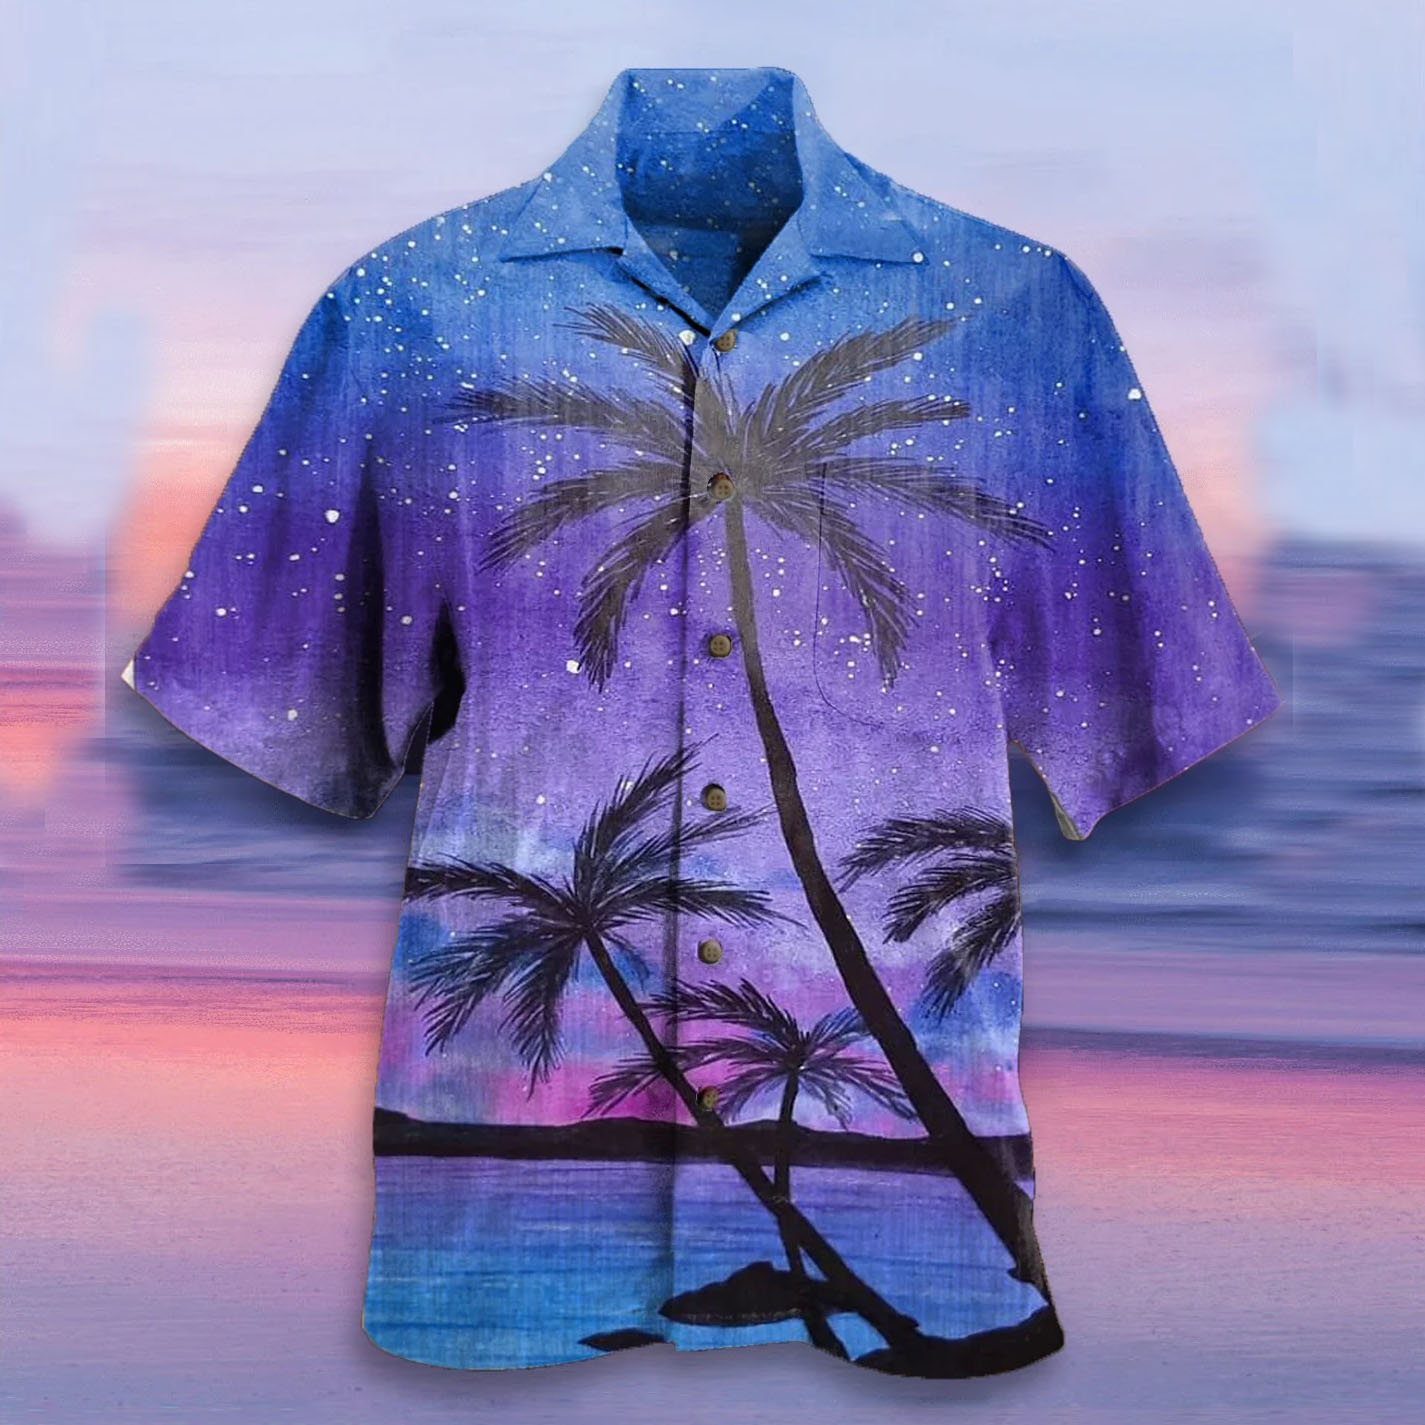 Men's Coconut Short Sleeve Chic Beach Shirt